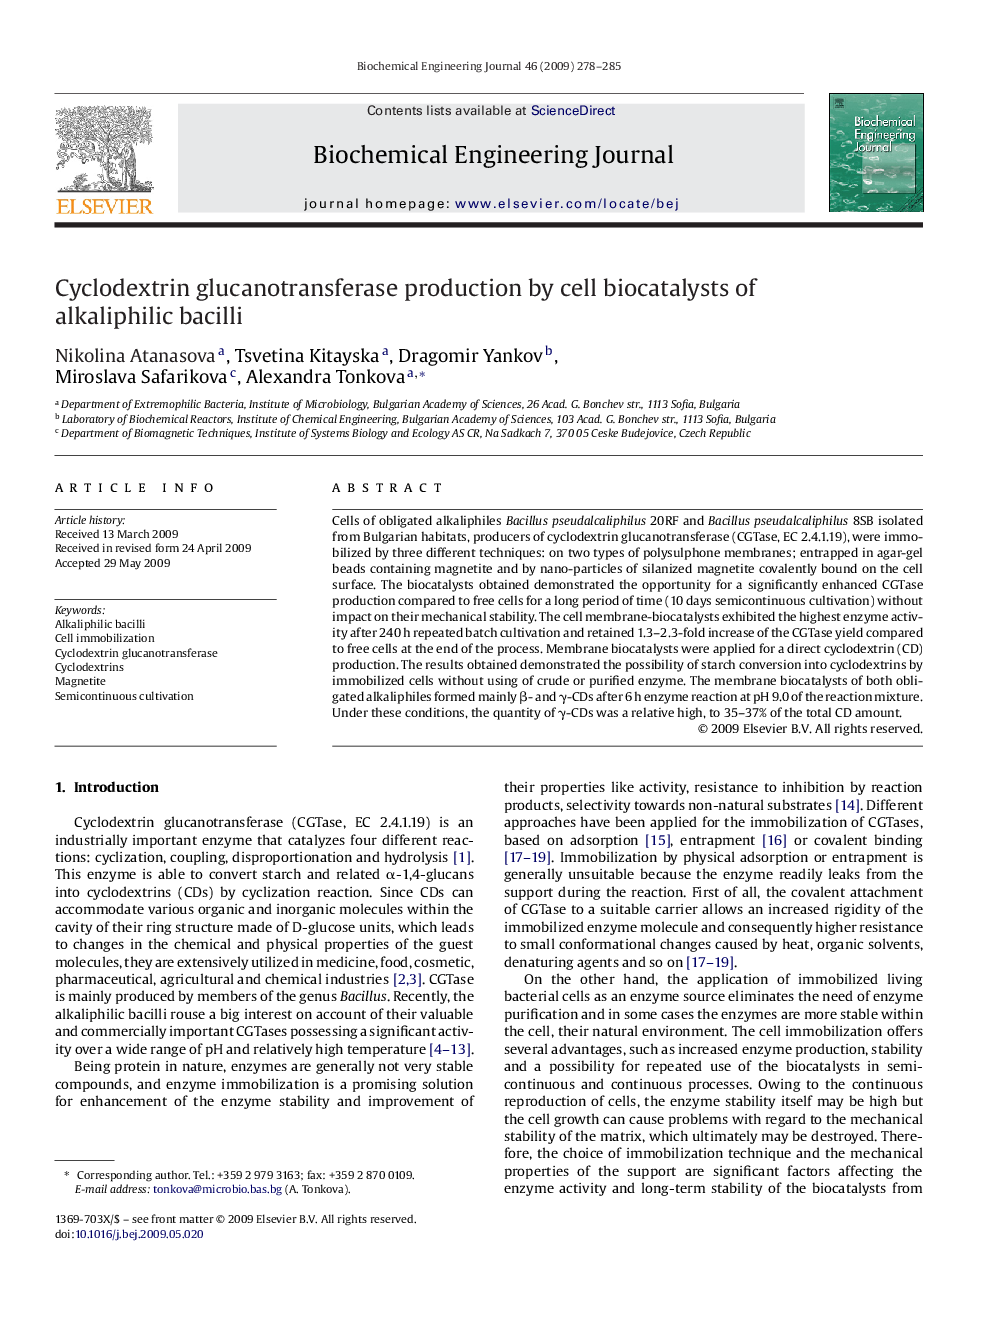 Cyclodextrin glucanotransferase production by cell biocatalysts of alkaliphilic bacilli